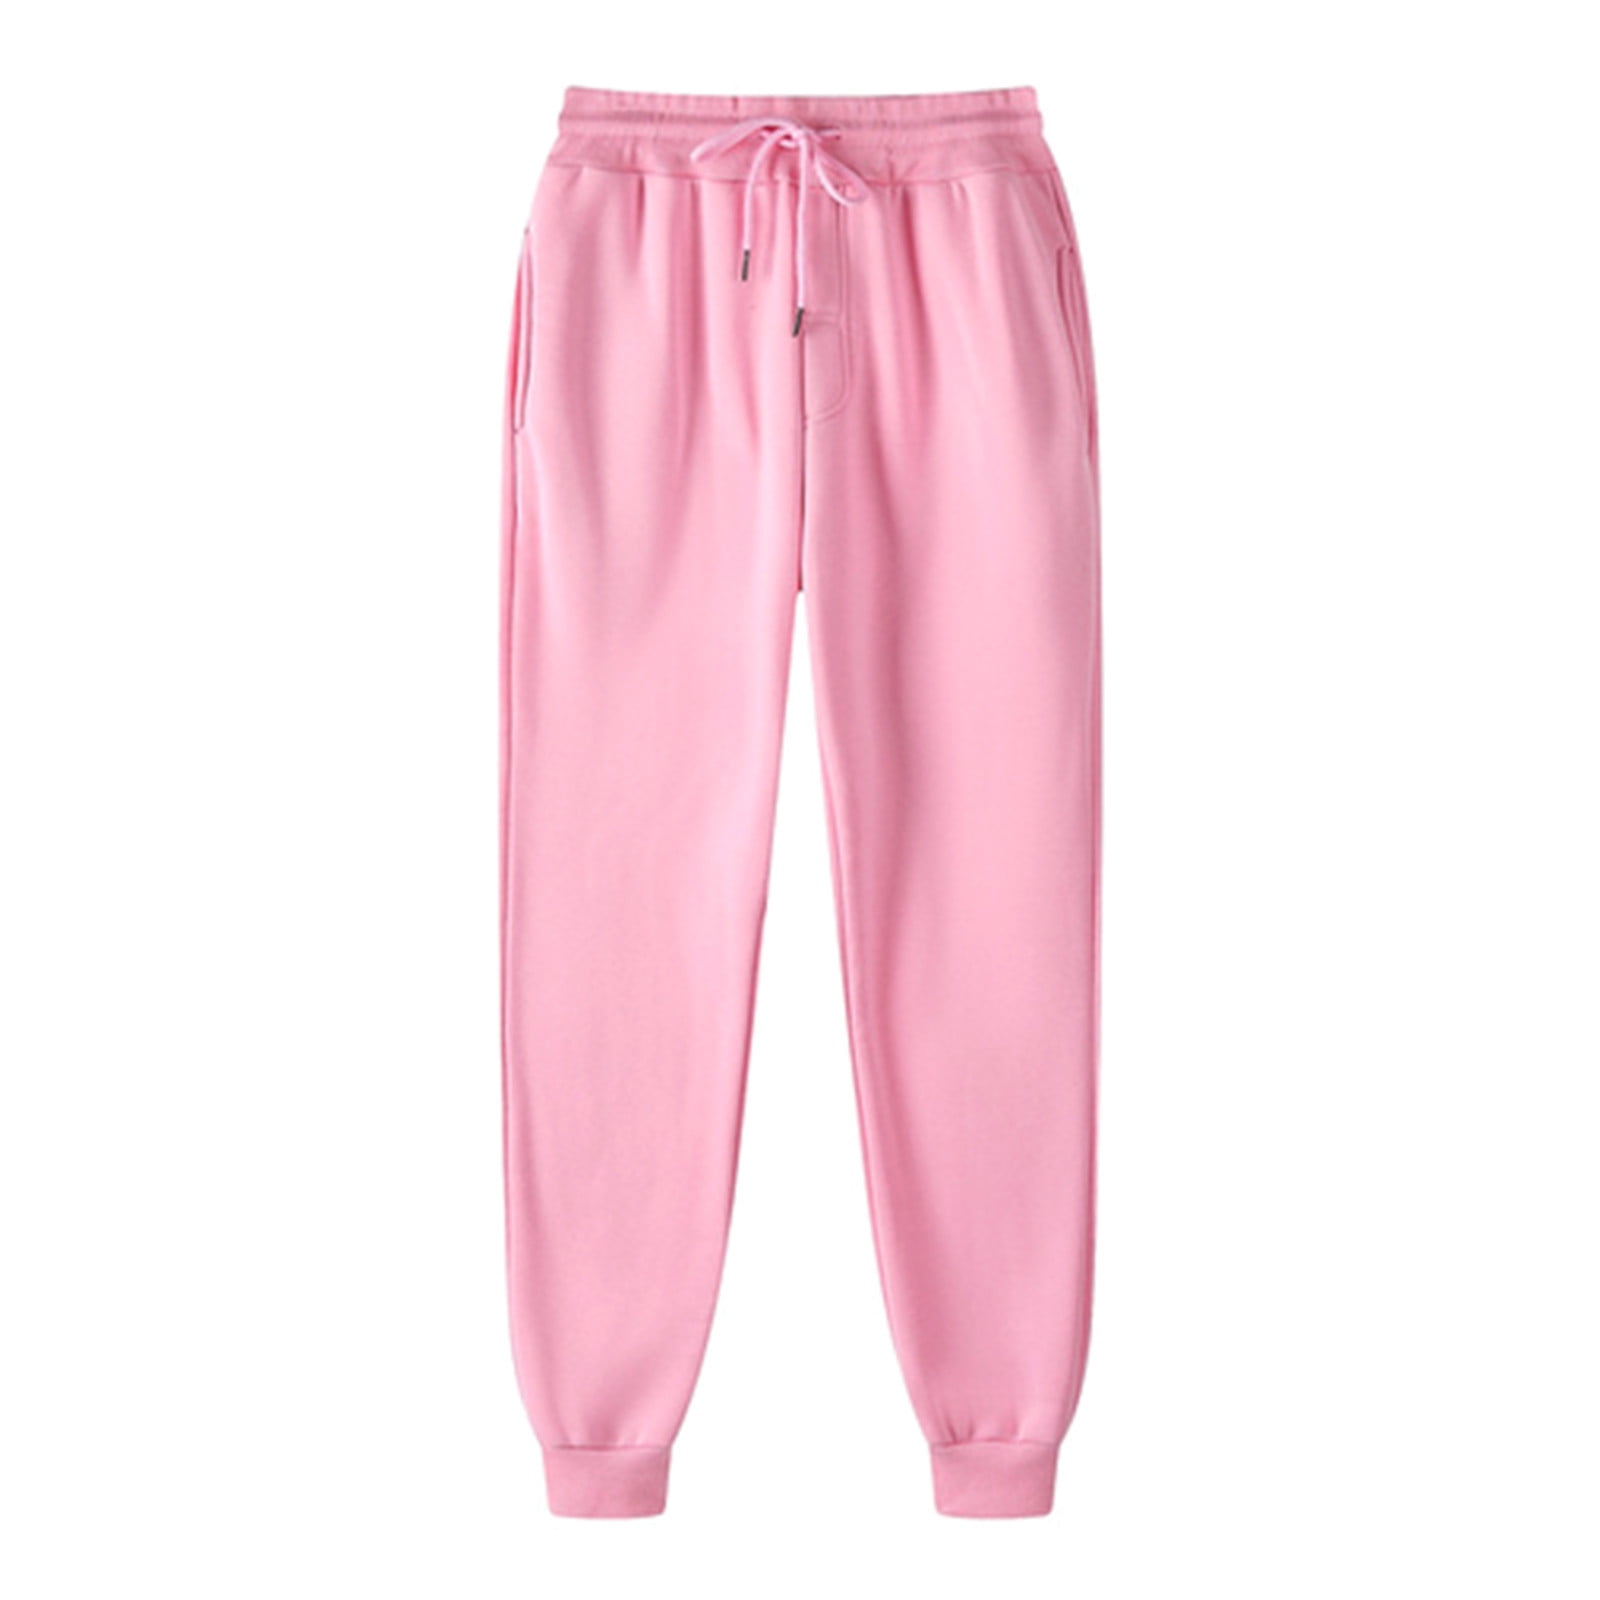 Scyoekwg Mens and Womens Sweatpants Casual Solid Color Running Fitness  Sports Pants Drawstring Waist Long Pants Small Feet Pants Pink XL